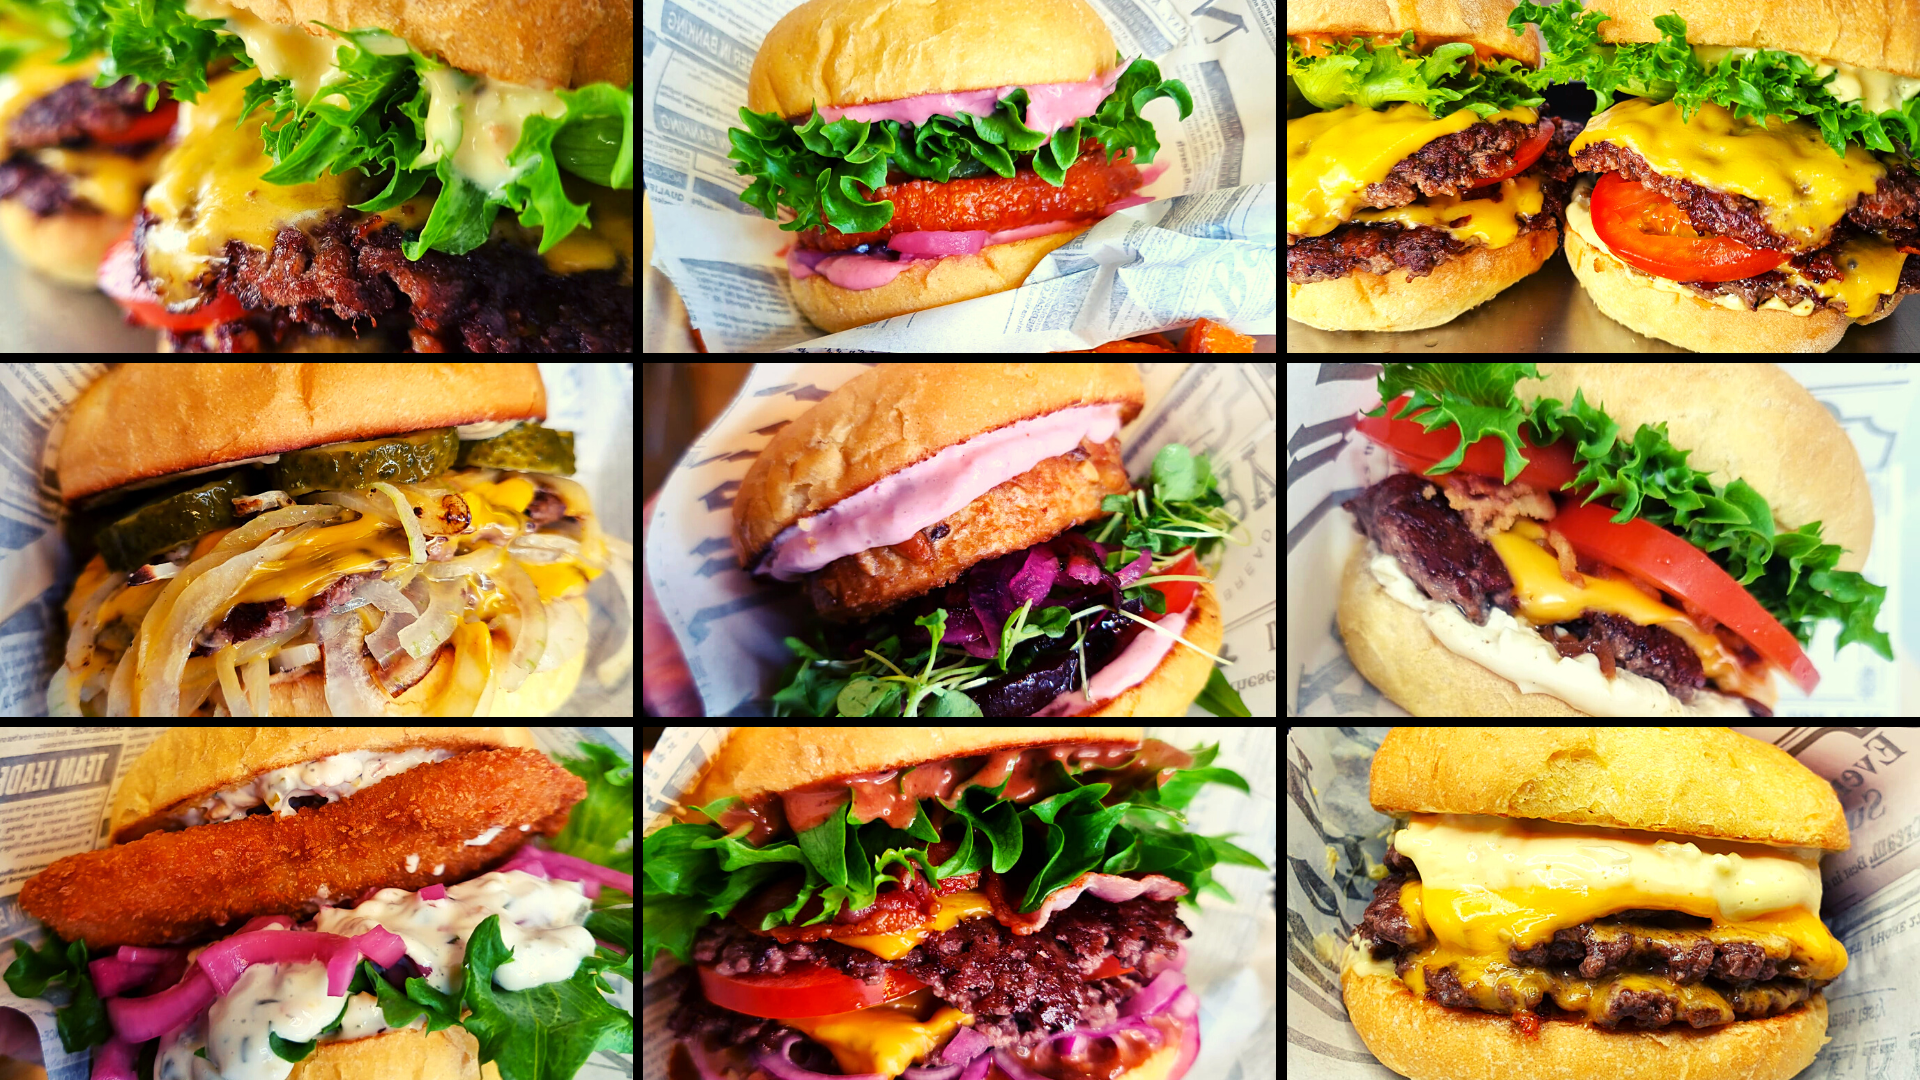 E-Meal Burgers meny åland hamburgare mariehamn